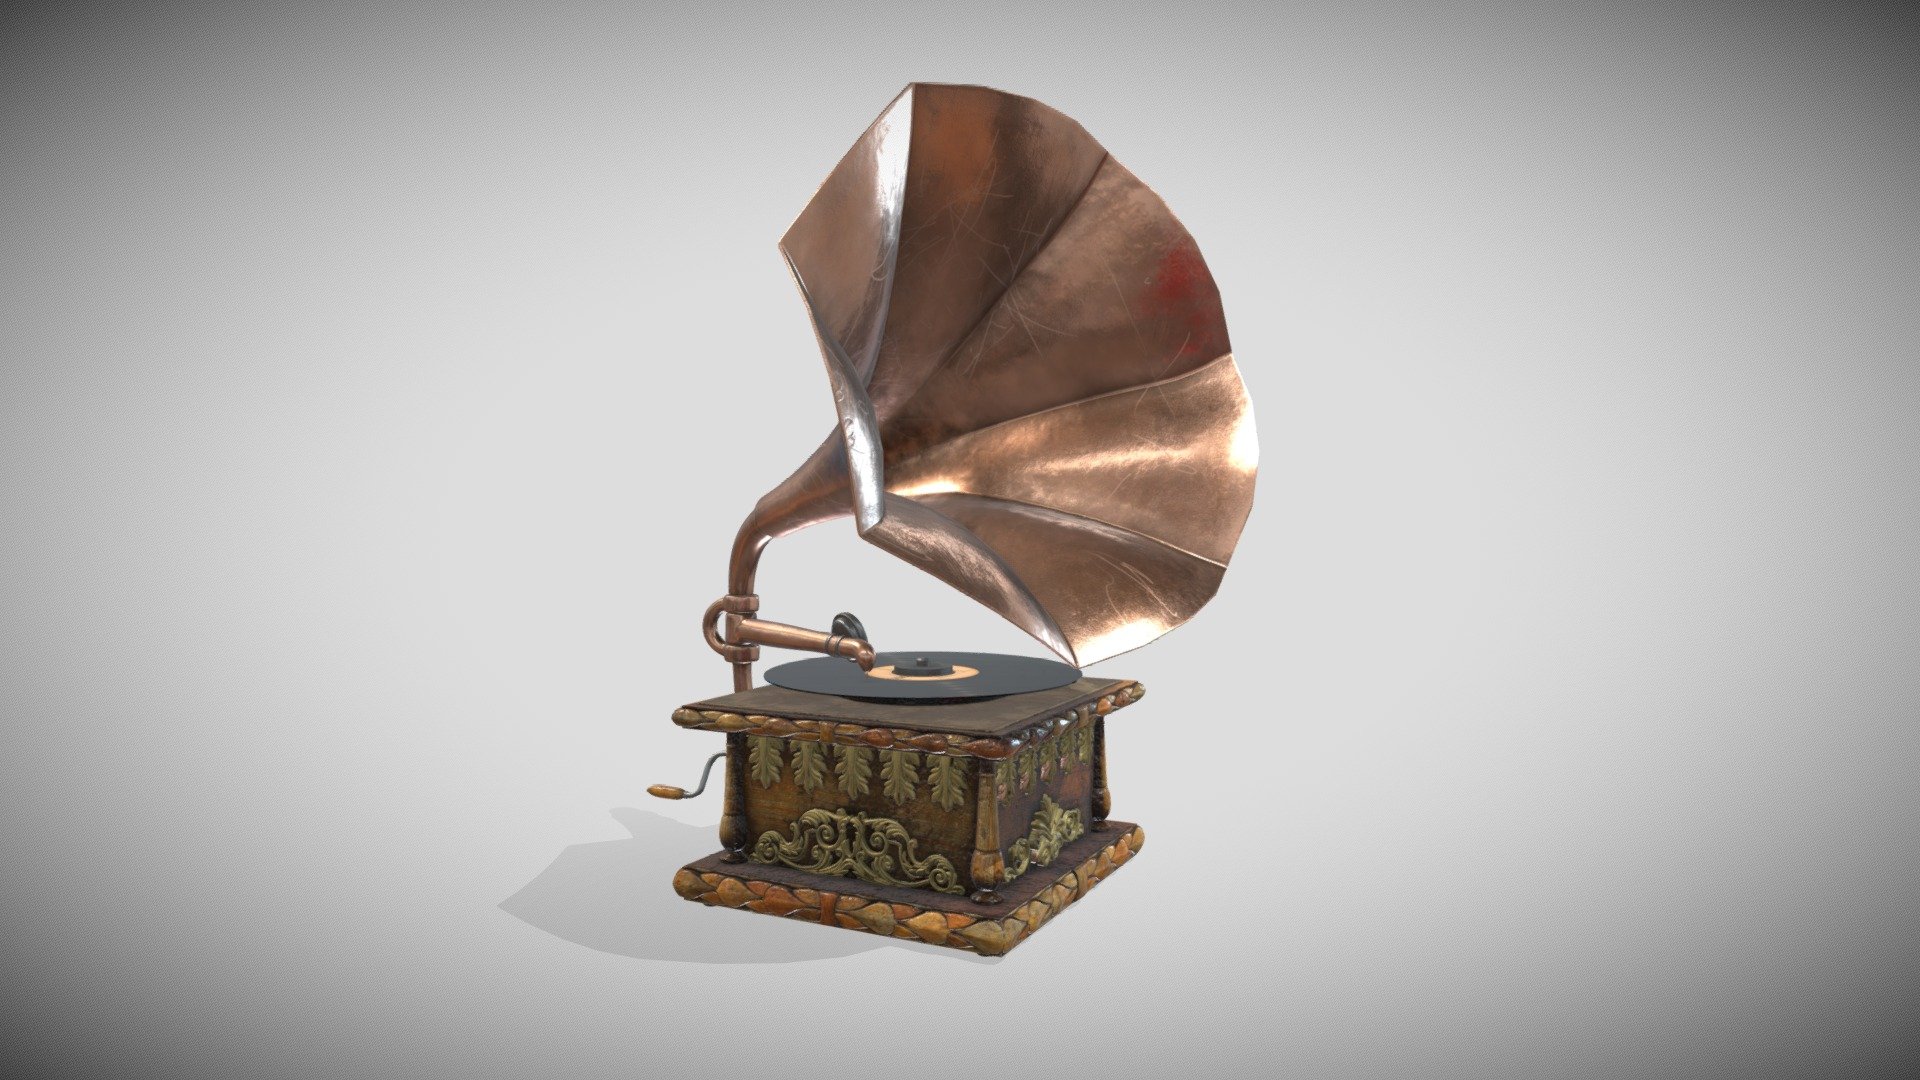 One Material PBR Metalness 4k - Record Player - Grammofono - Buy Royalty Free 3D model by Francesco Coldesina (@topfrank2013) 3d model